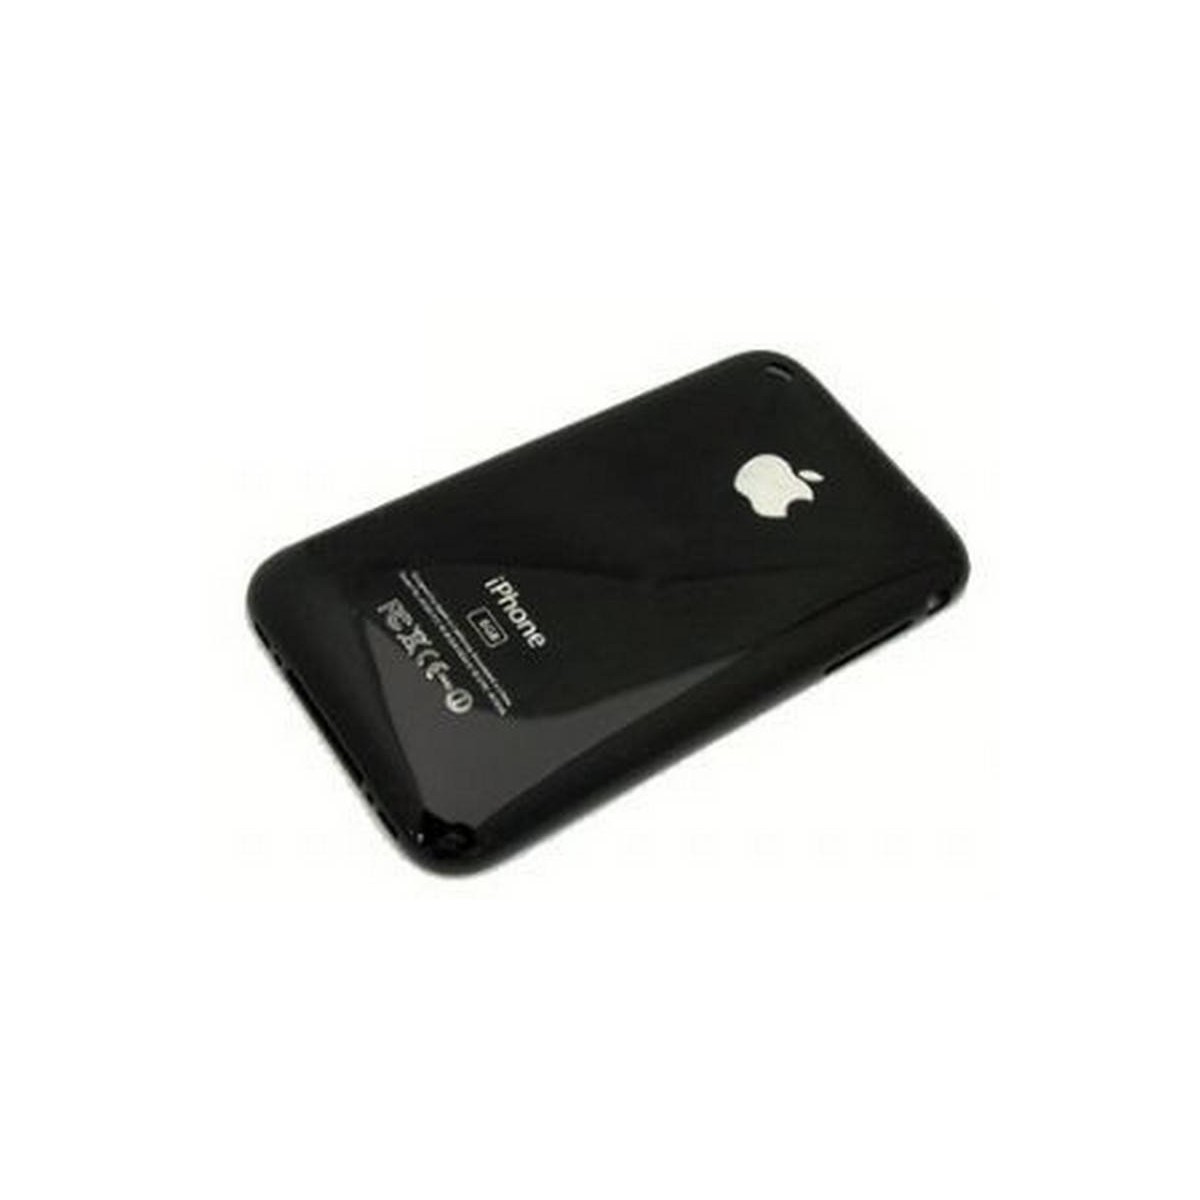 iPhone 3G 16GB carcaça traseira, tapa bateria PRETA